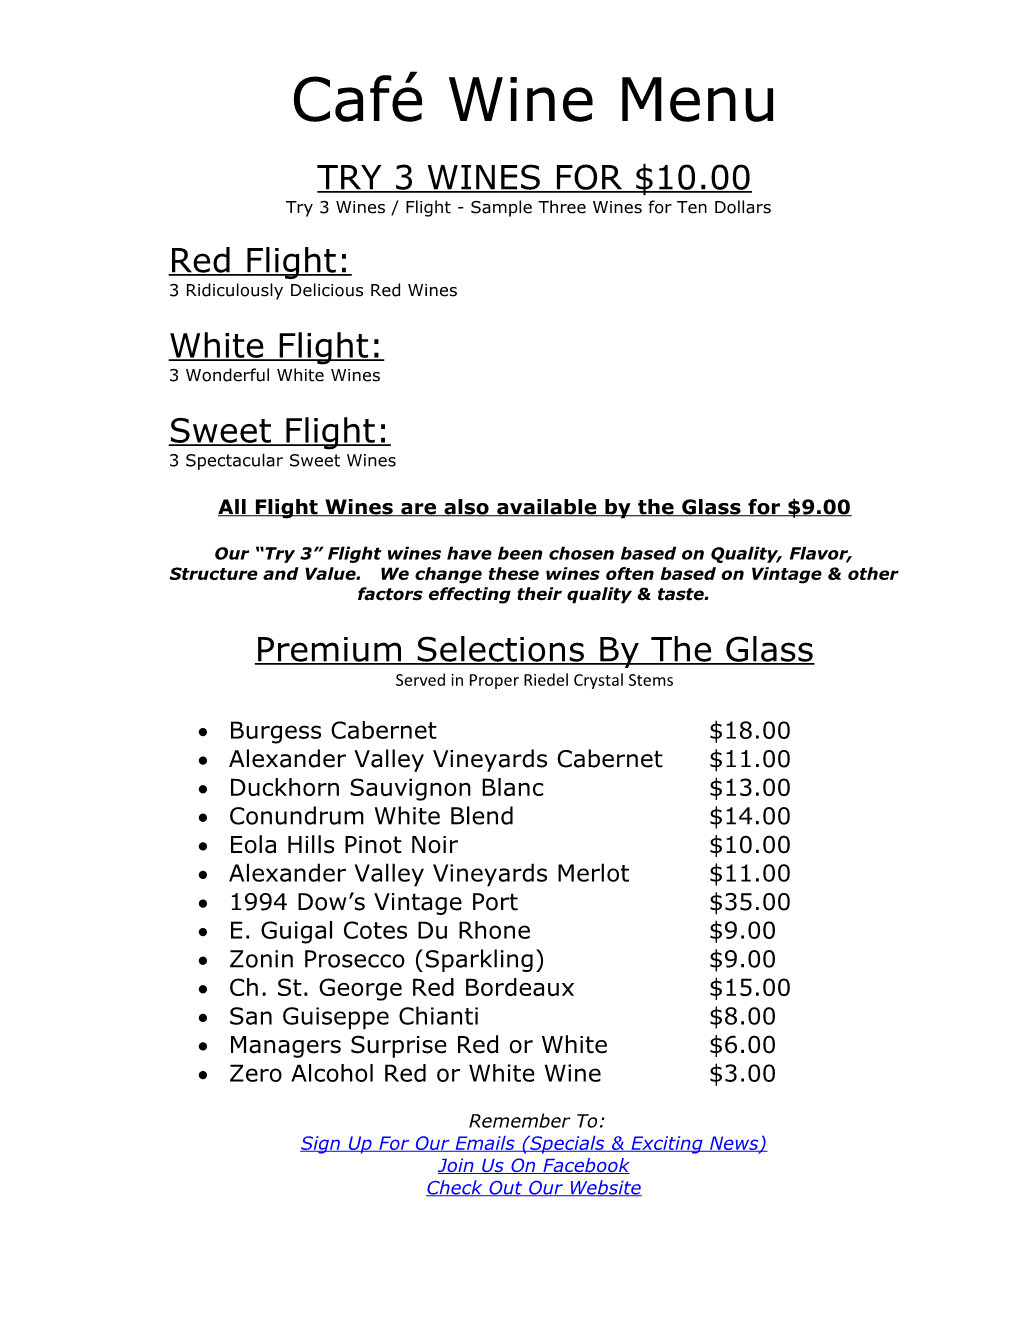 Try 3 Wines / Flight - Sample Three Wines for Ten Dollars